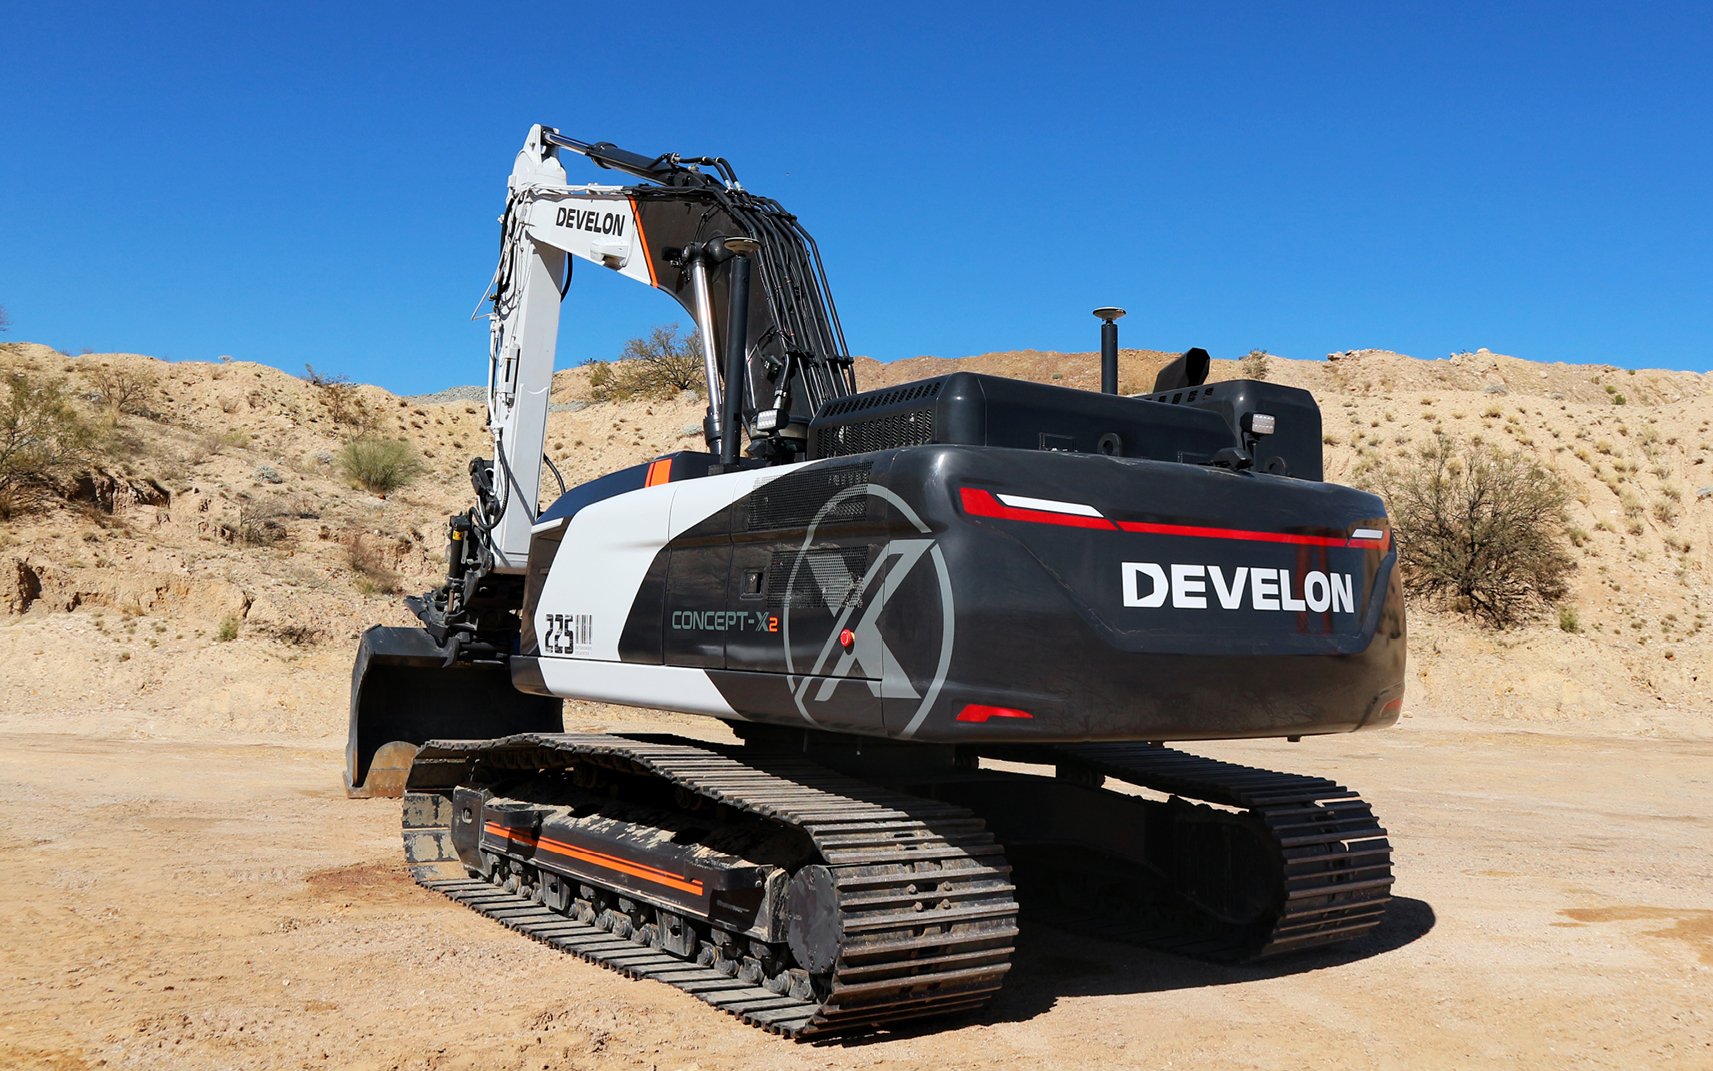 The new DEVELON DX225-CX crawler excavator at the DEVELON proving grounds in Arizona.